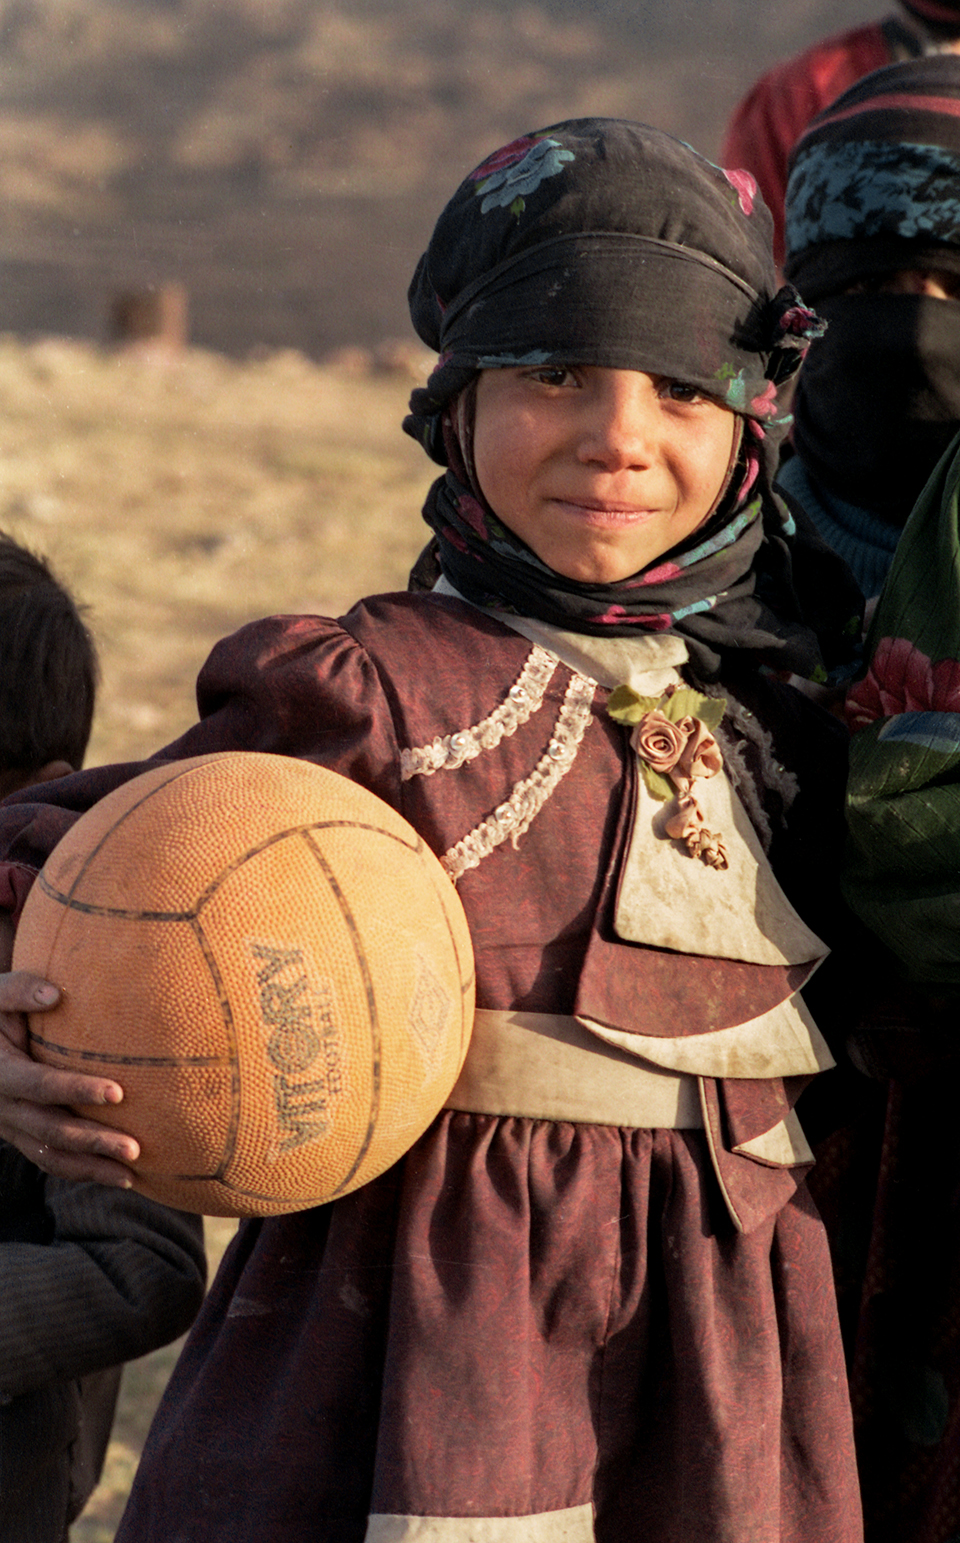 Let's Play Ball, Yemen